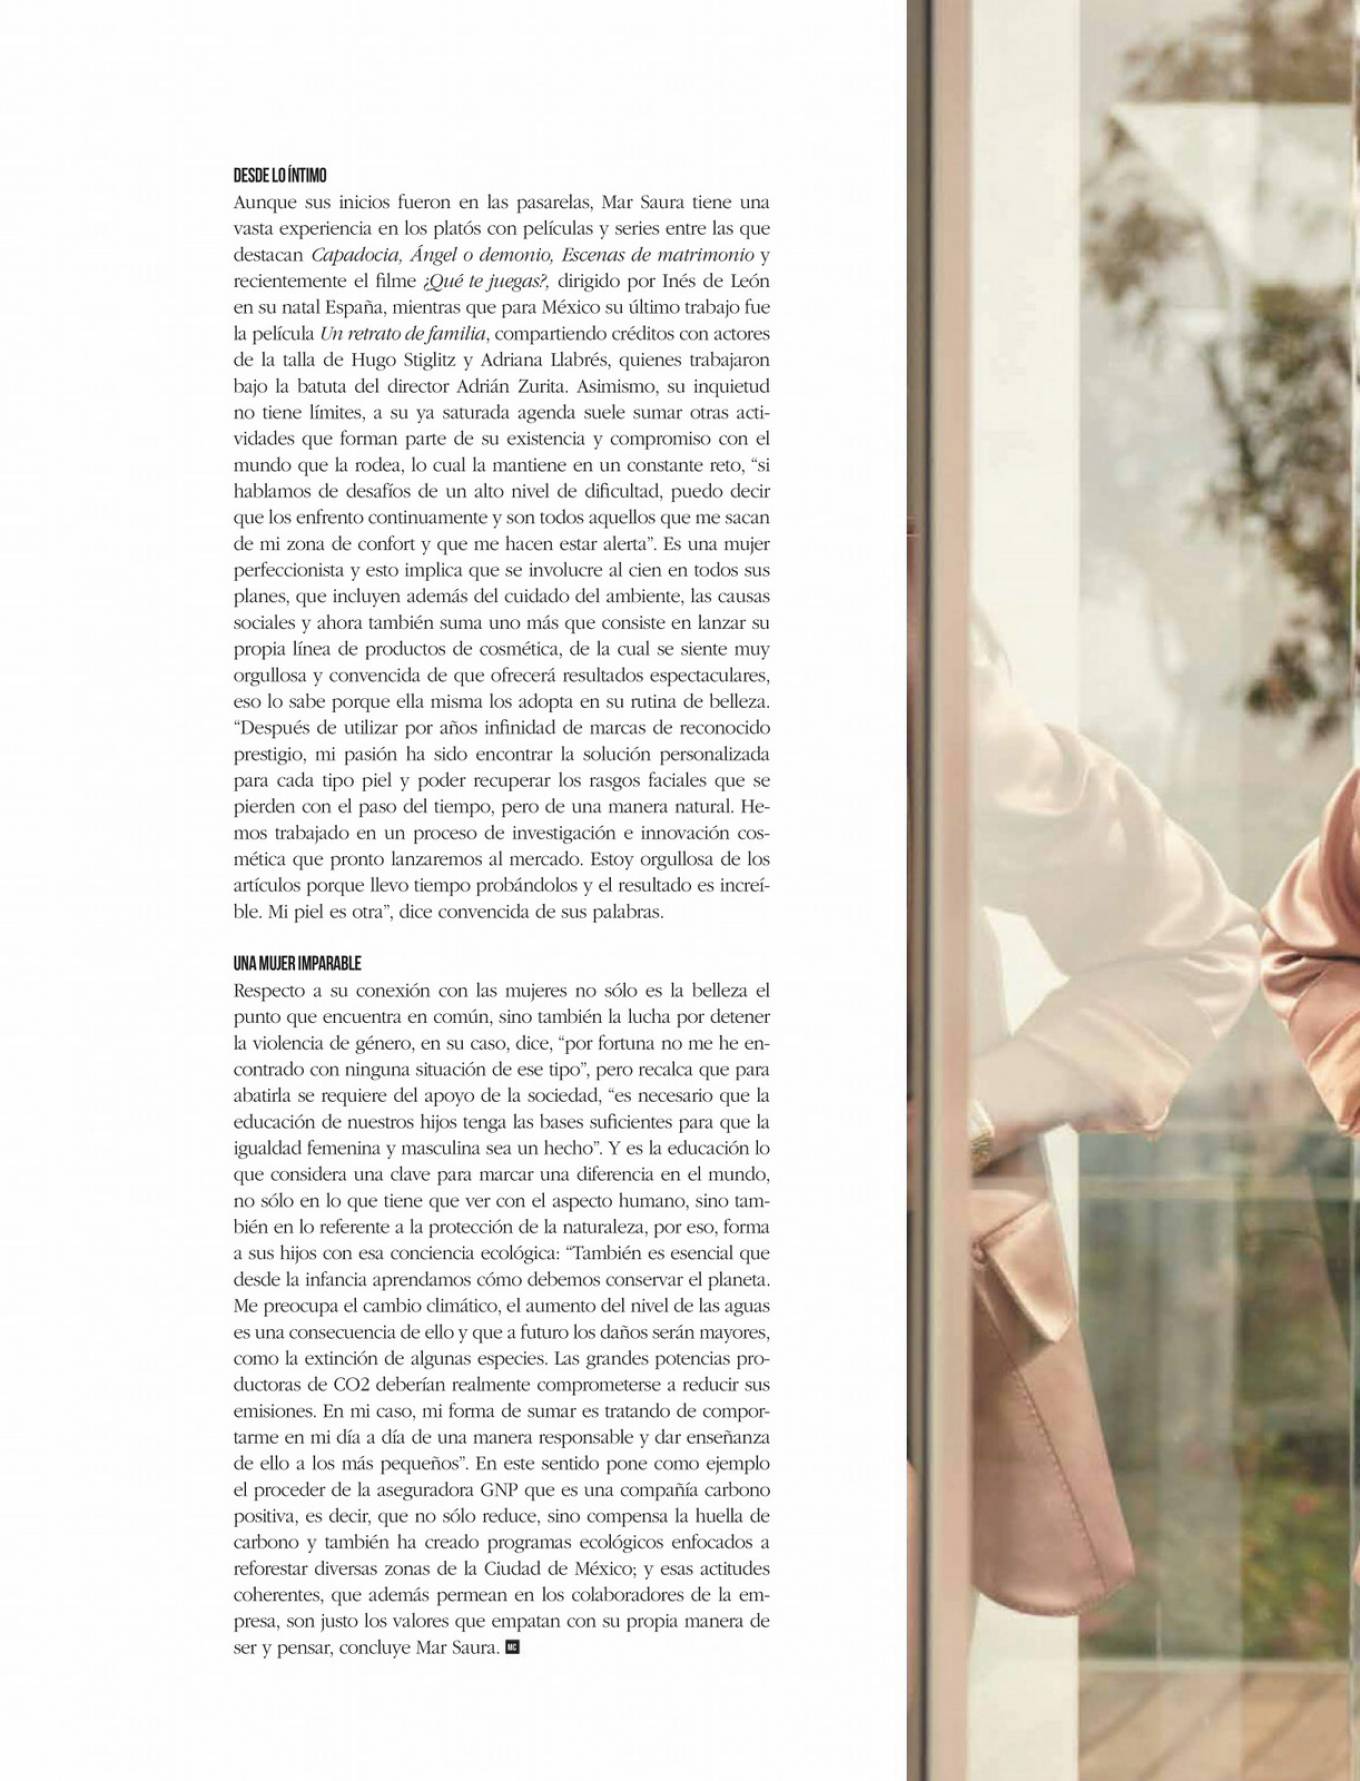 Mar Saura â€“ Marie Claire magazine (Mexico â€“ April 2020)